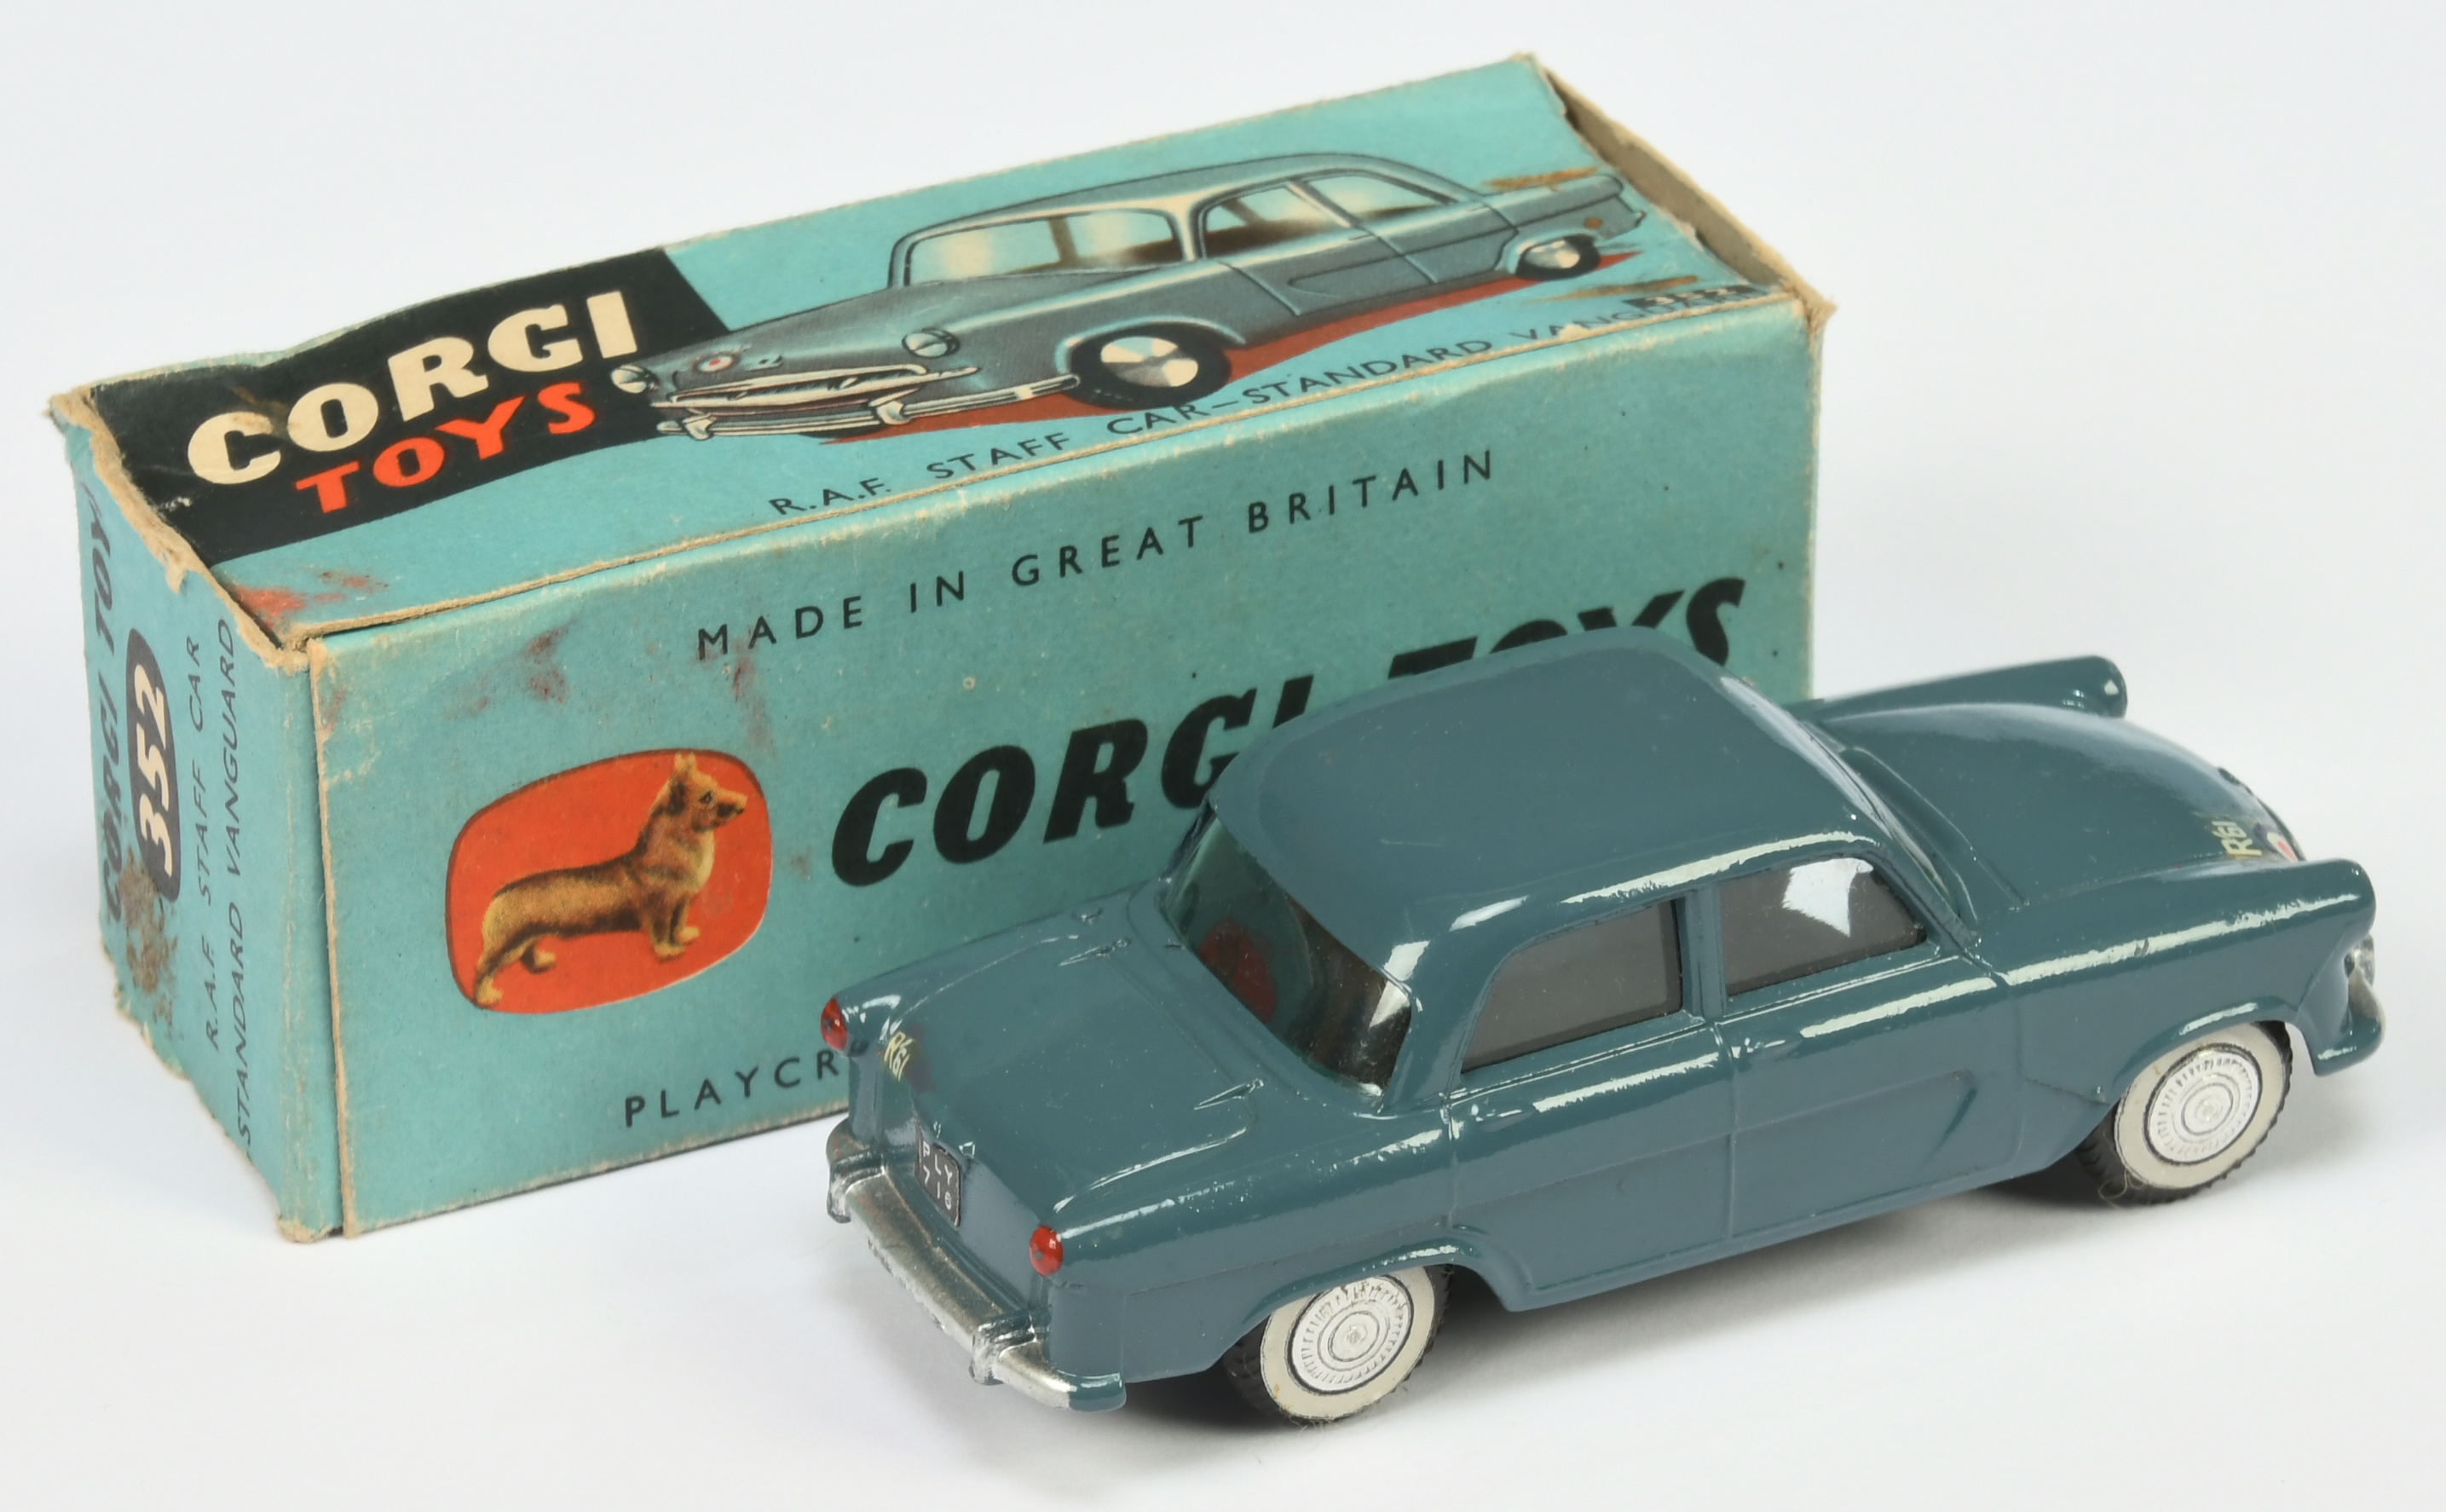 Corgi Toys 352 Standard Vanguard "RAF" Car - Greyish-blue, silver trim, flat spun hubs (Accessory... - Image 2 of 2